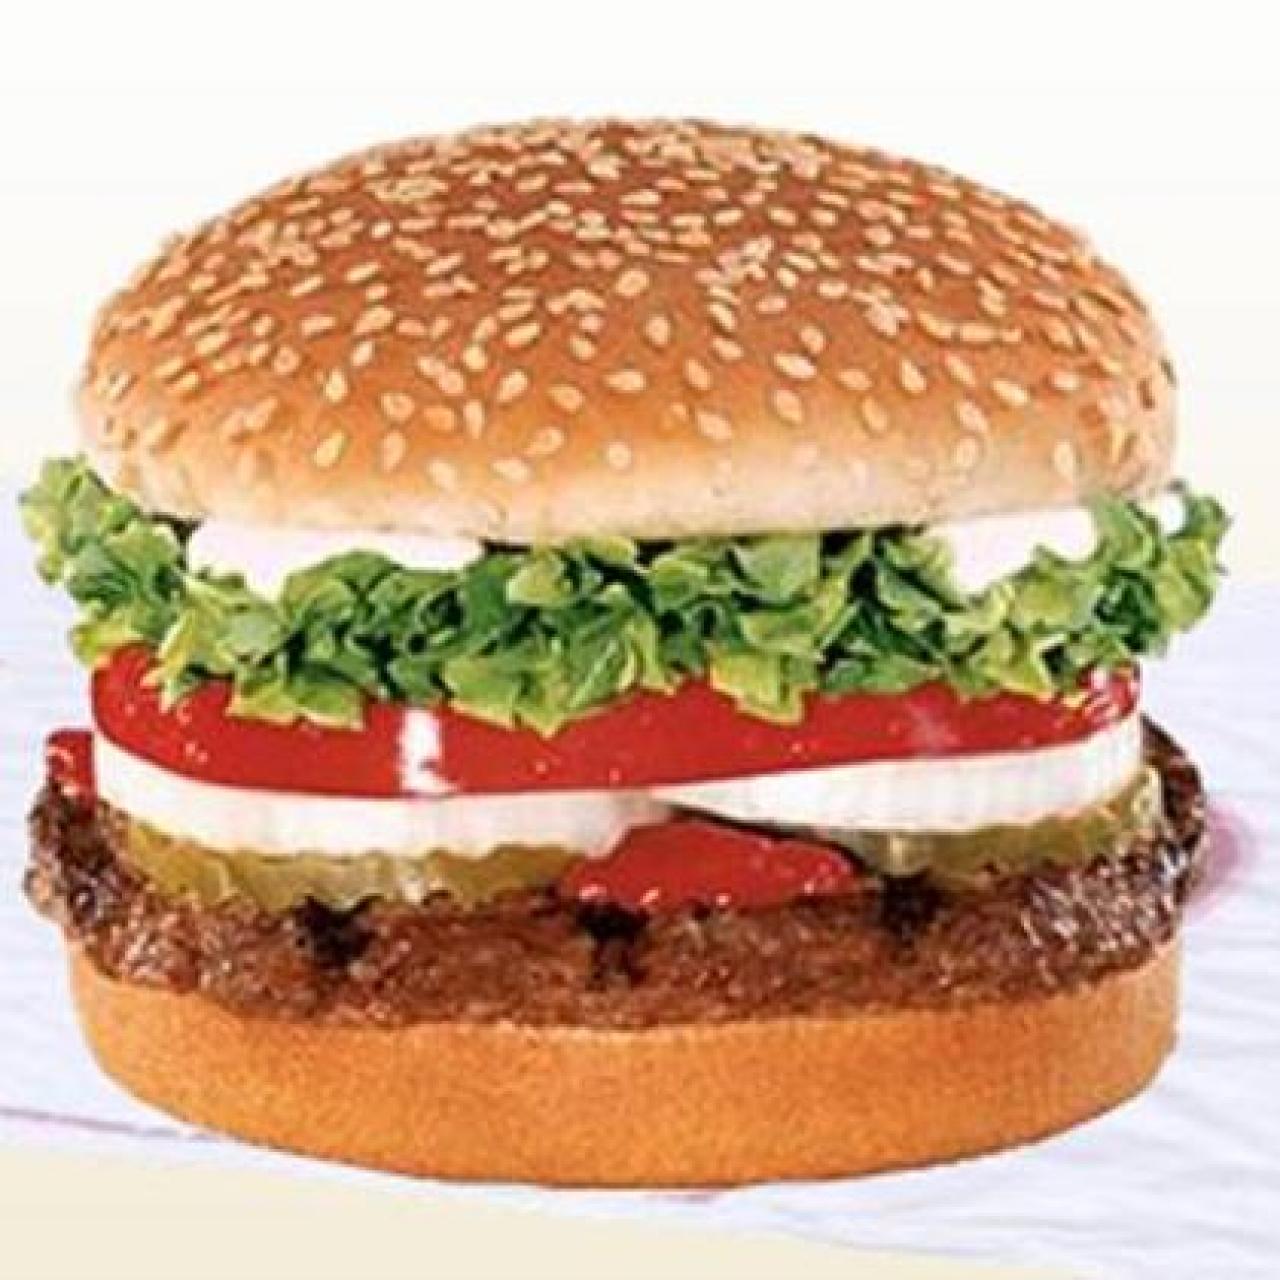 Order This, Not That: Burger King